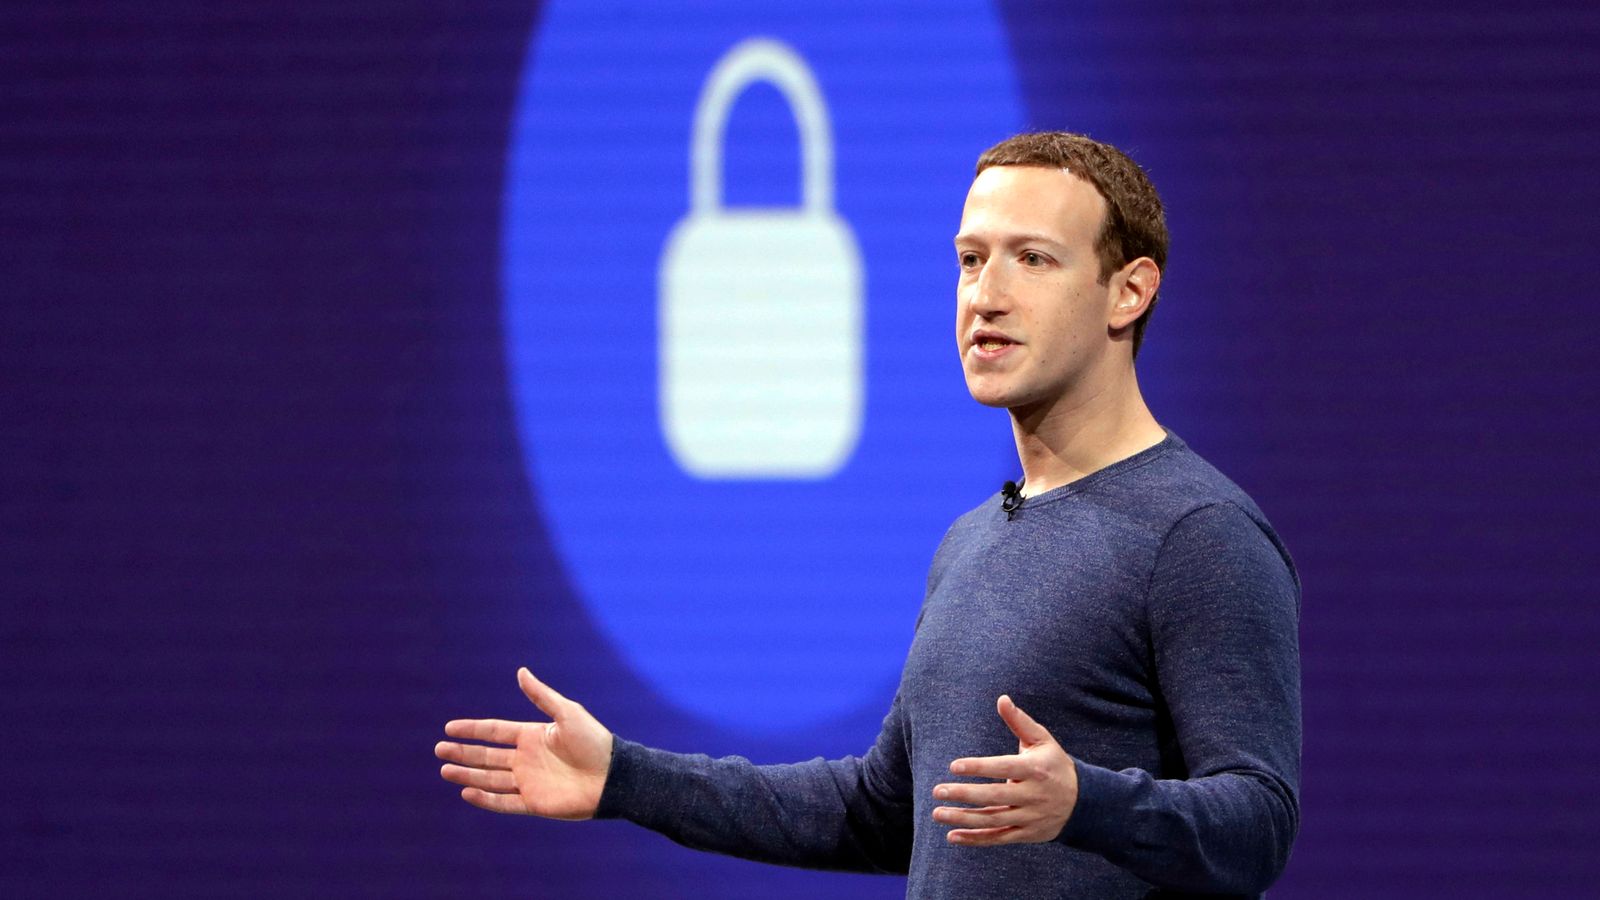 Facebook boss Mark Zuckerberg personally sued over massive Cambridge Analytica data breach scandal